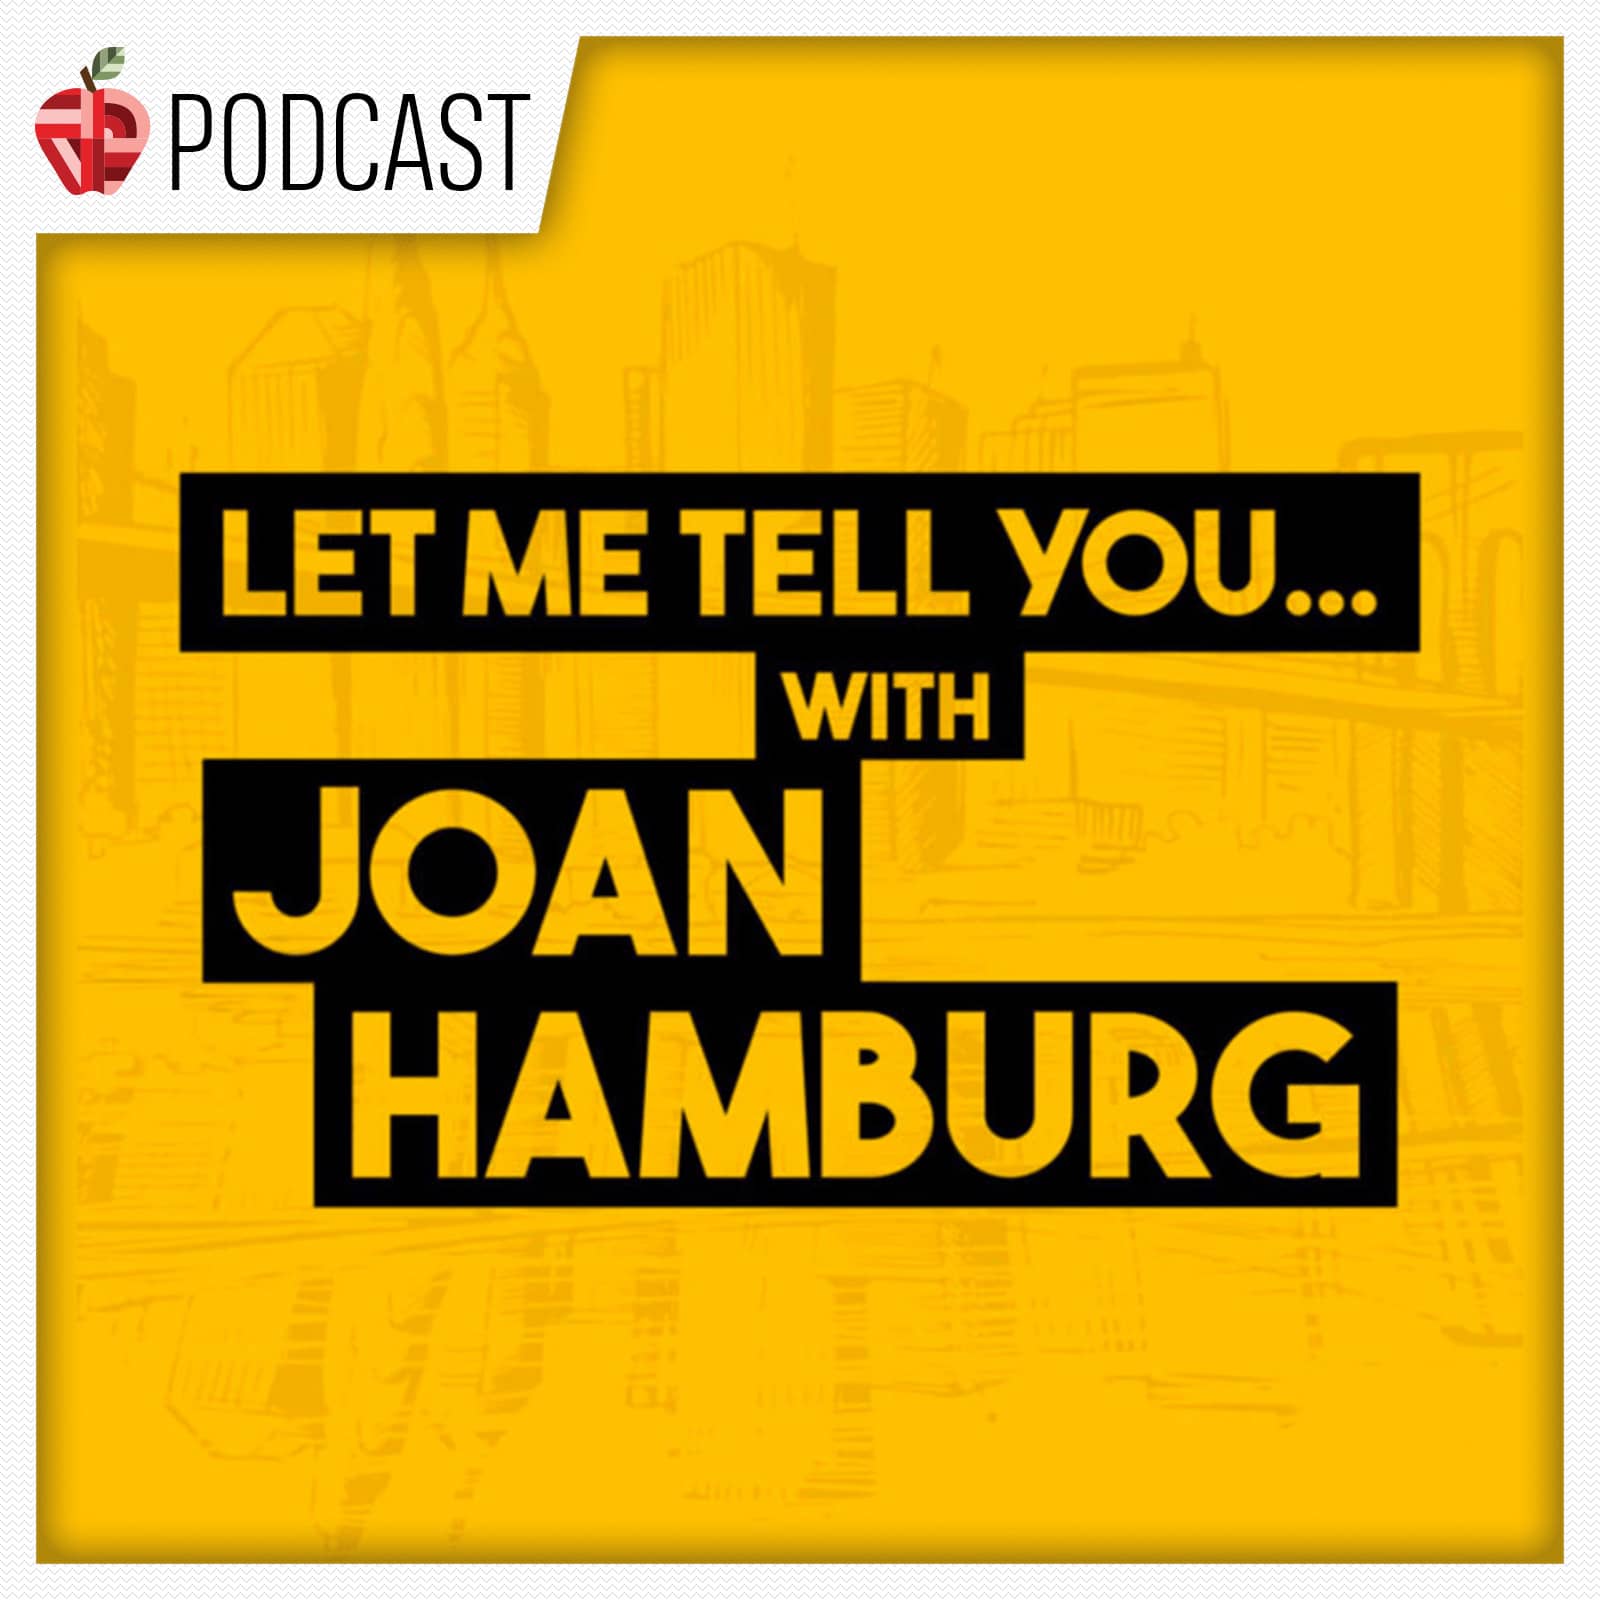 joan-hamburg-let-me-tell-you-podcast-podcast-logo-18